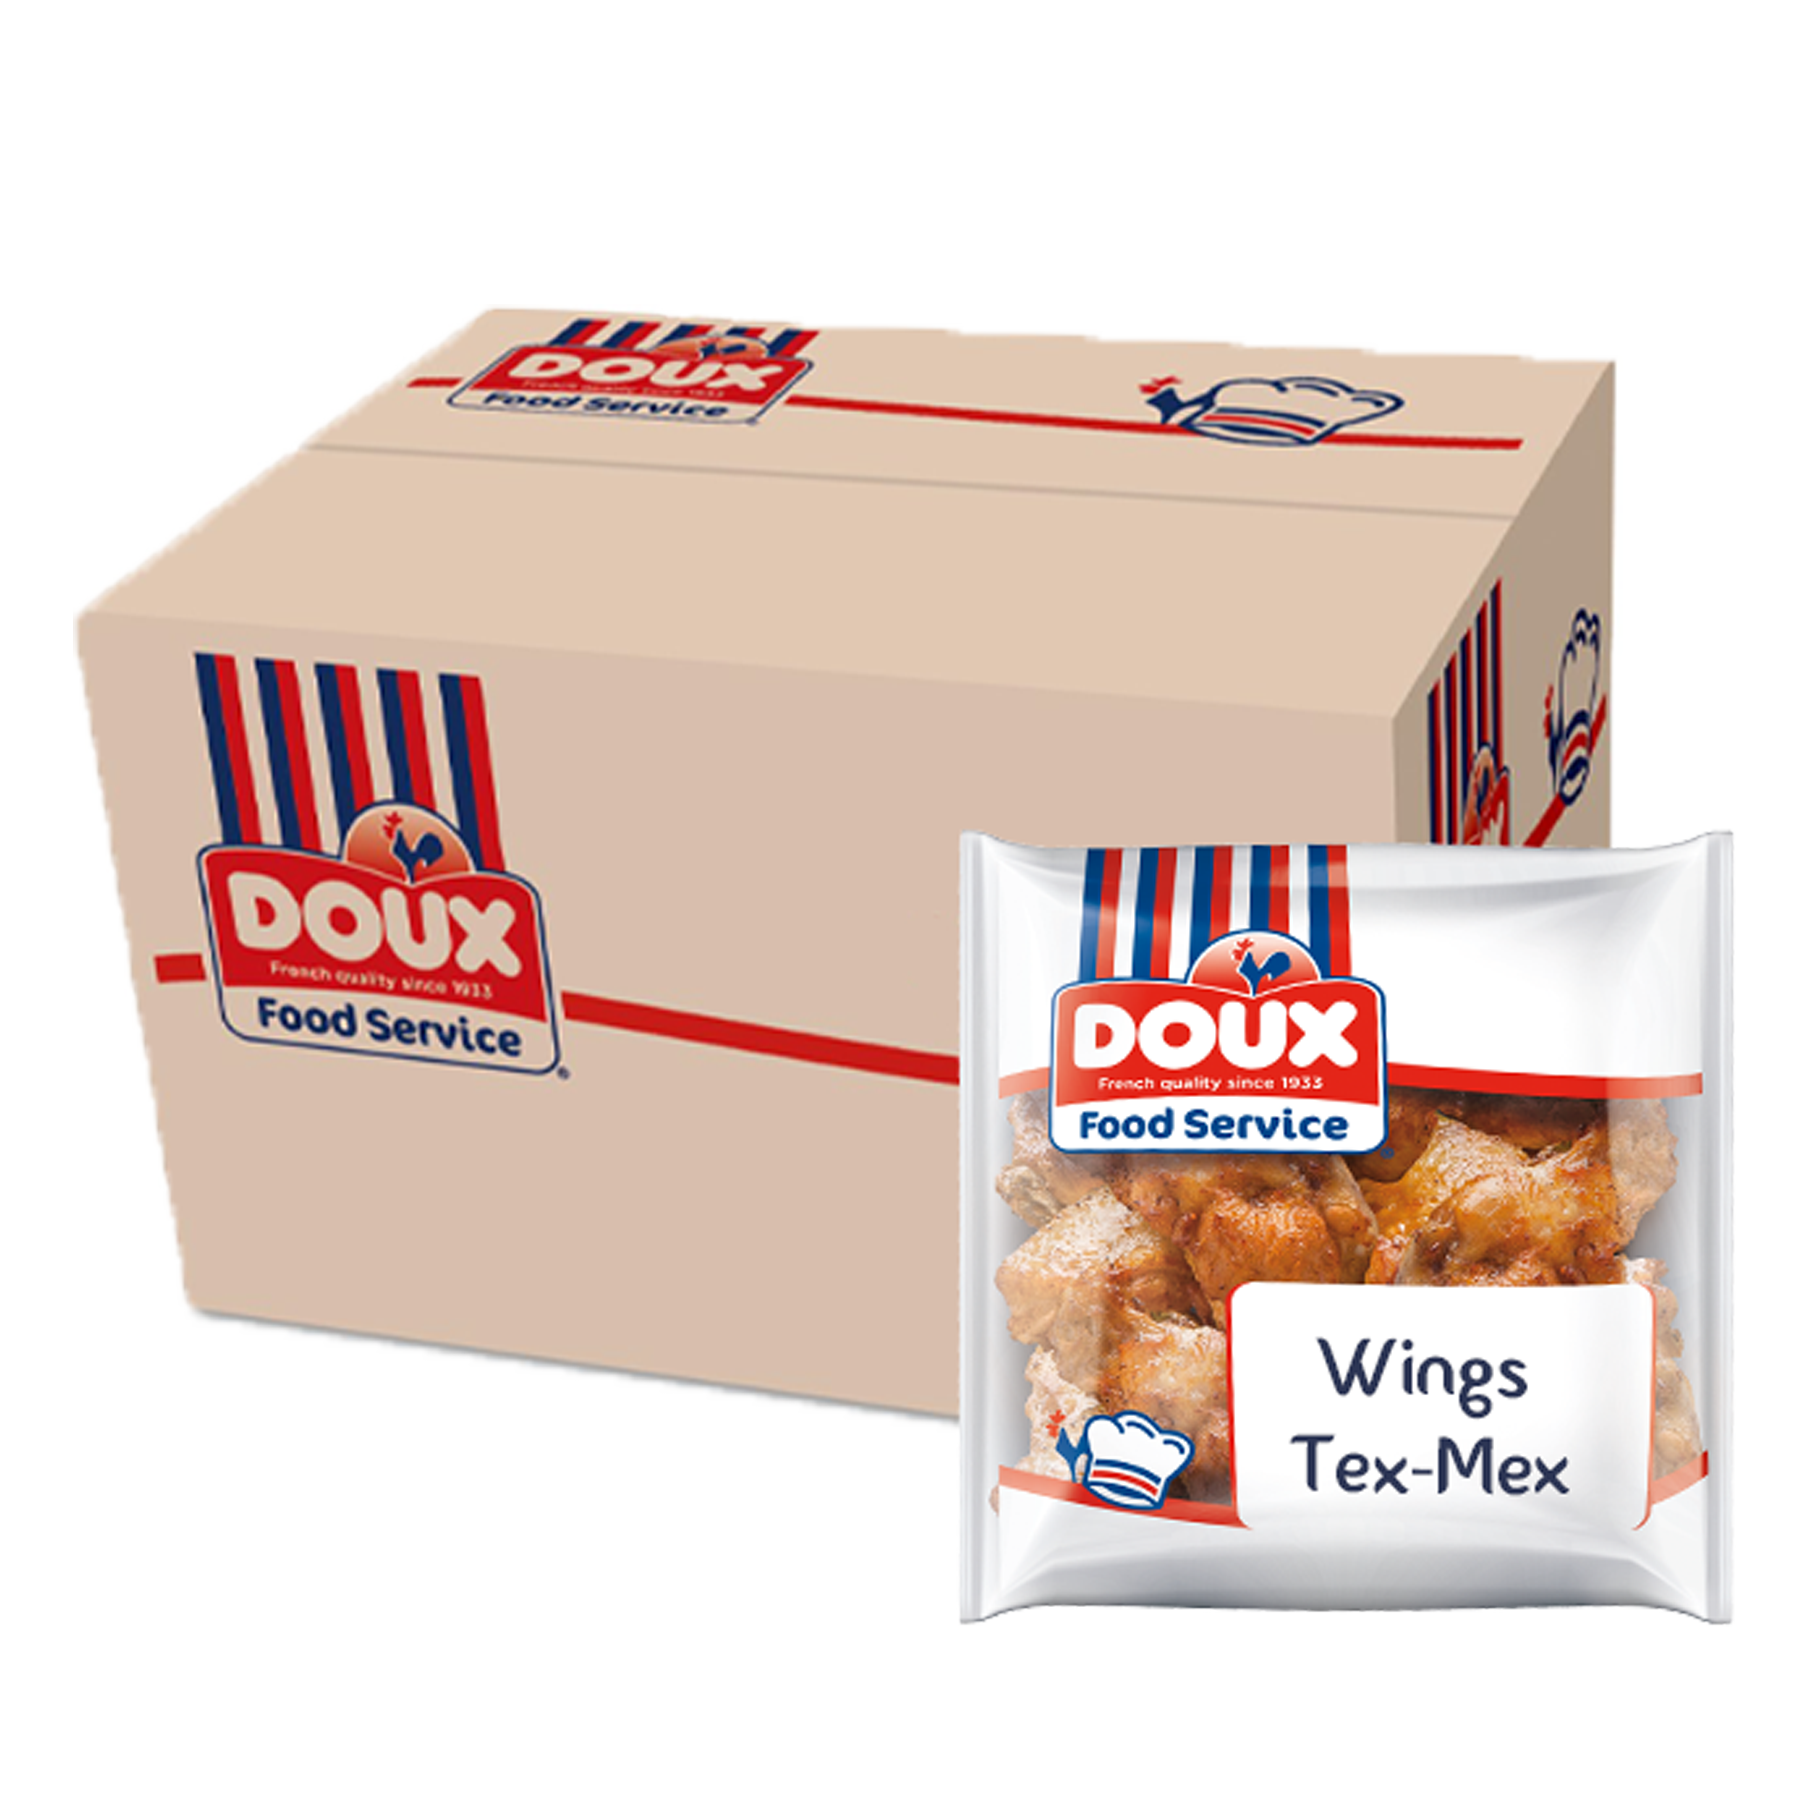 Caja de Doux Food Service y bolsa de 1 kg de Doux Food Service